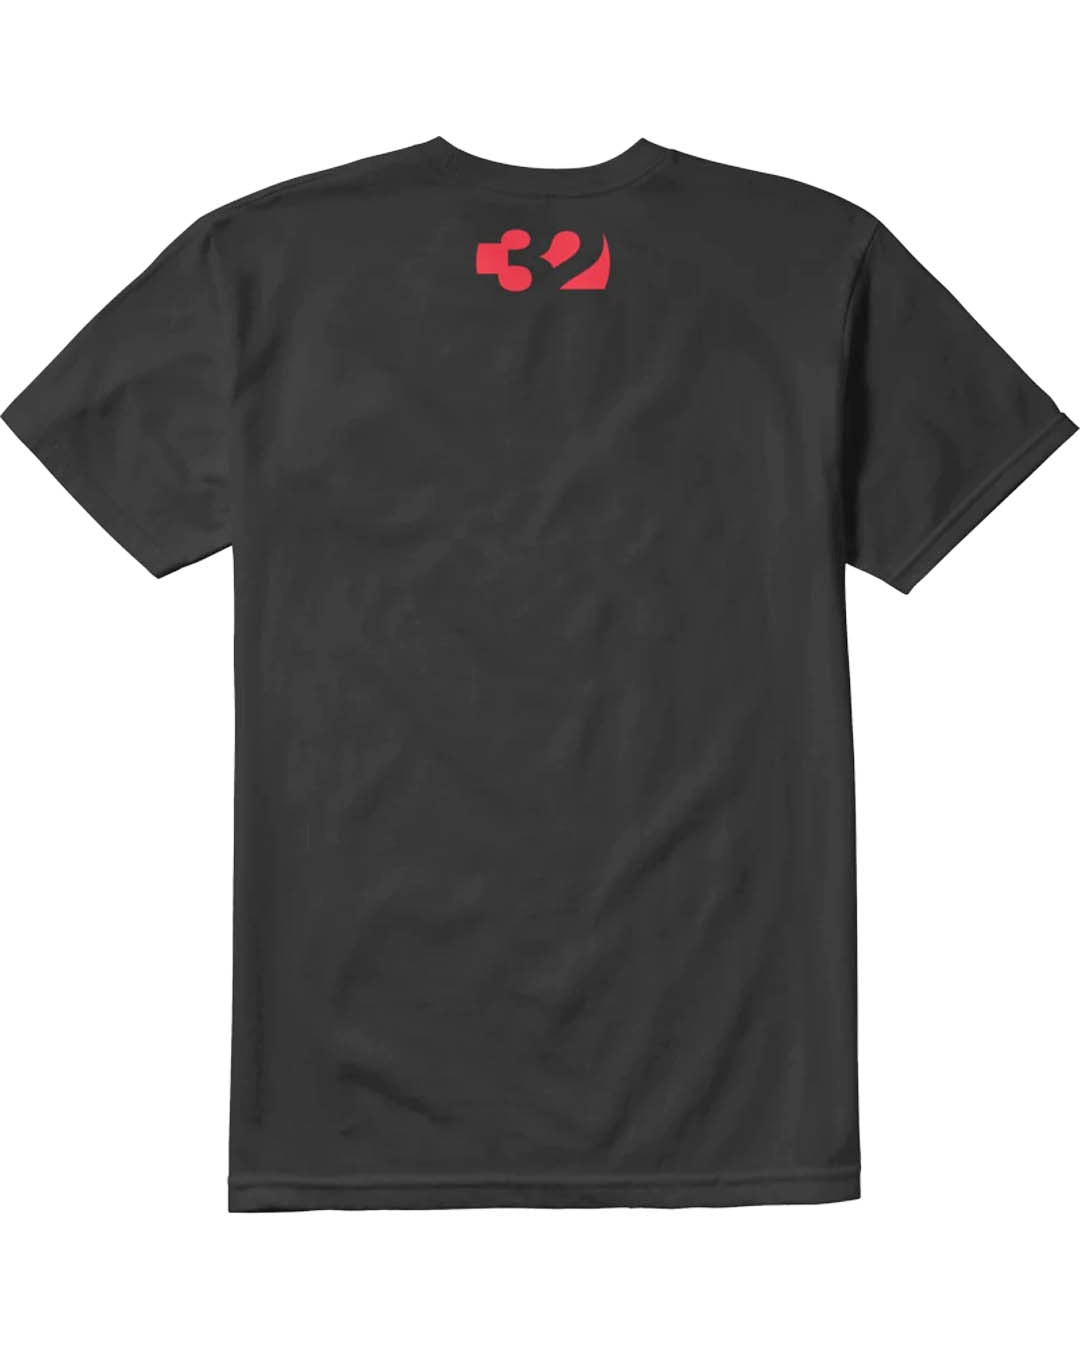 T-shirt Zeb Signature - Black